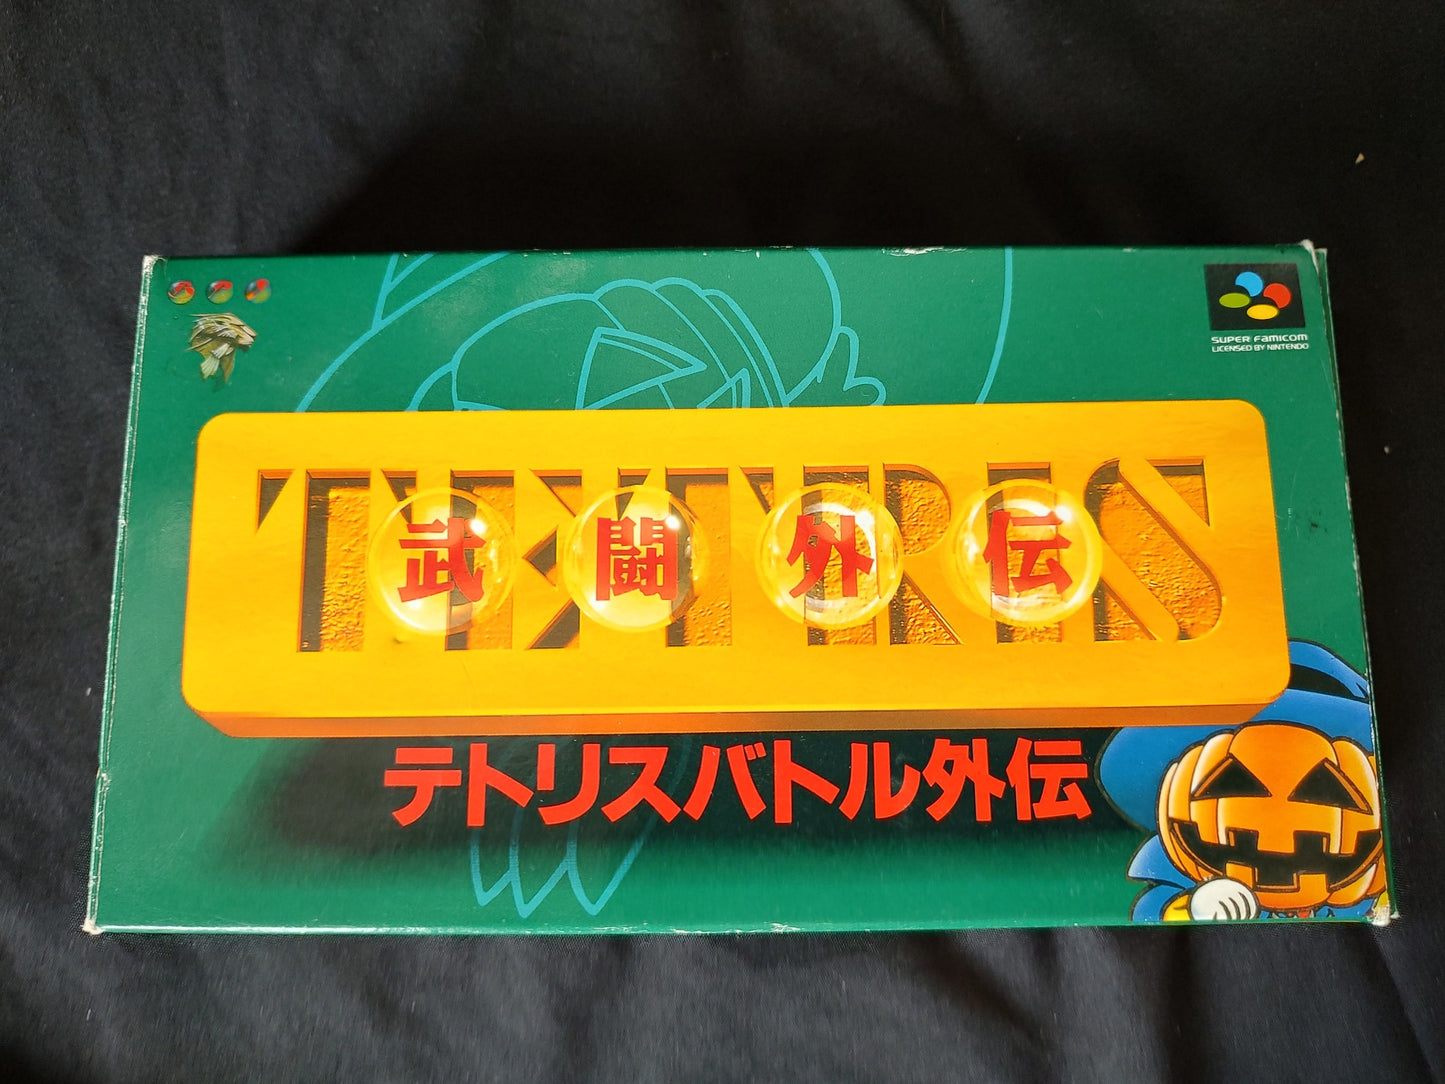 TETRIS BATTLE GAIDEN Nintendo Super Famicom Game Cartridge w/Manual, Box-g0223-